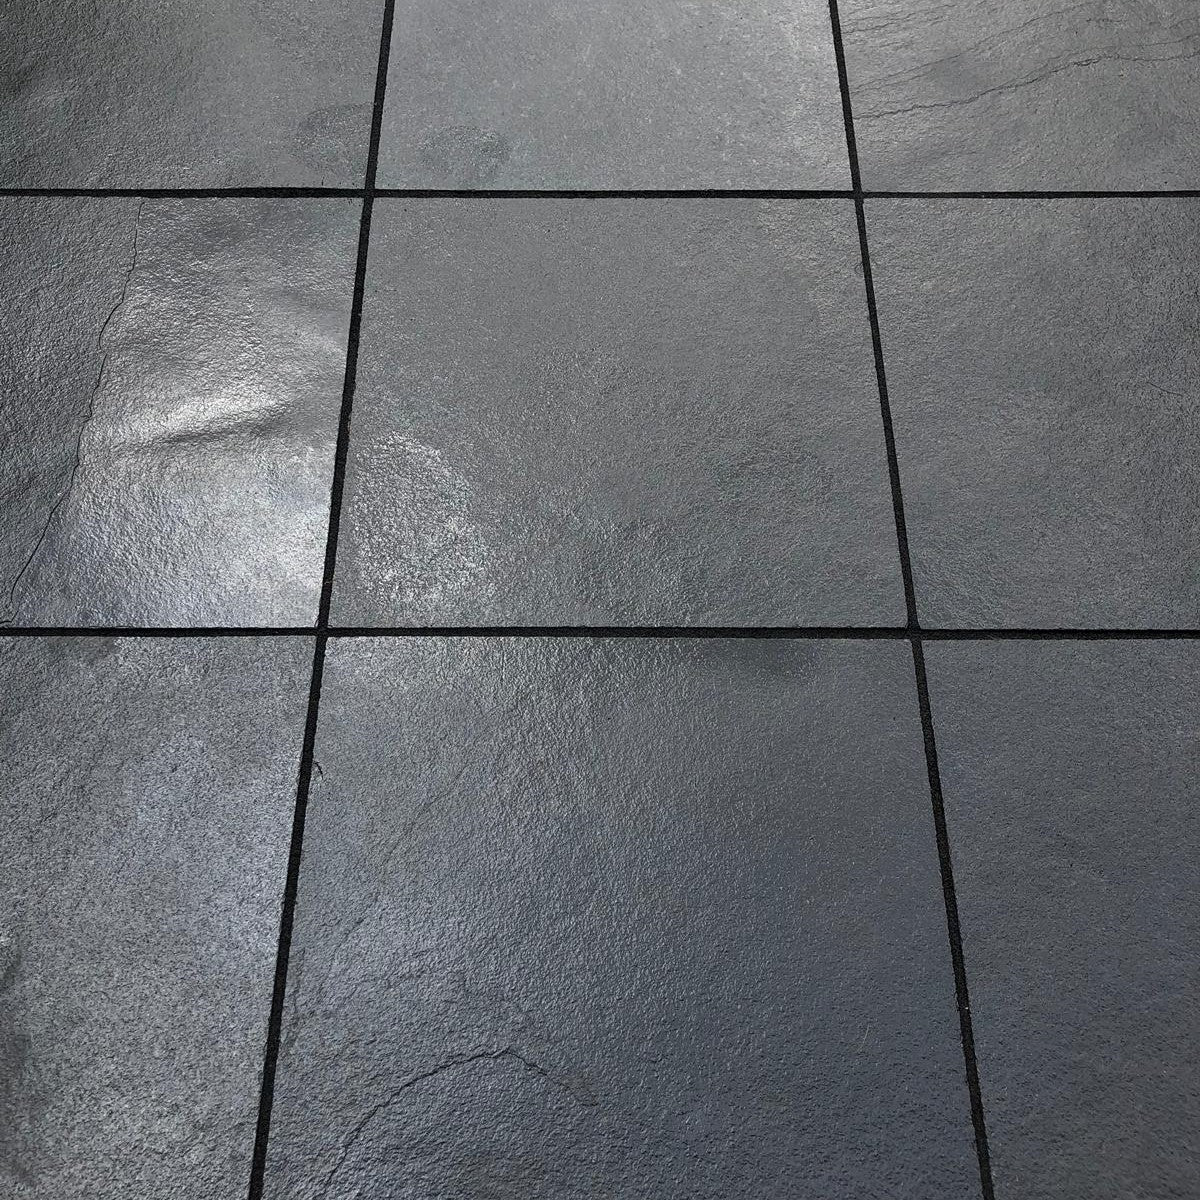 Black Limestone Paving Slabs  | 600 x 600 x 22 mm | Collection Milton Keynes